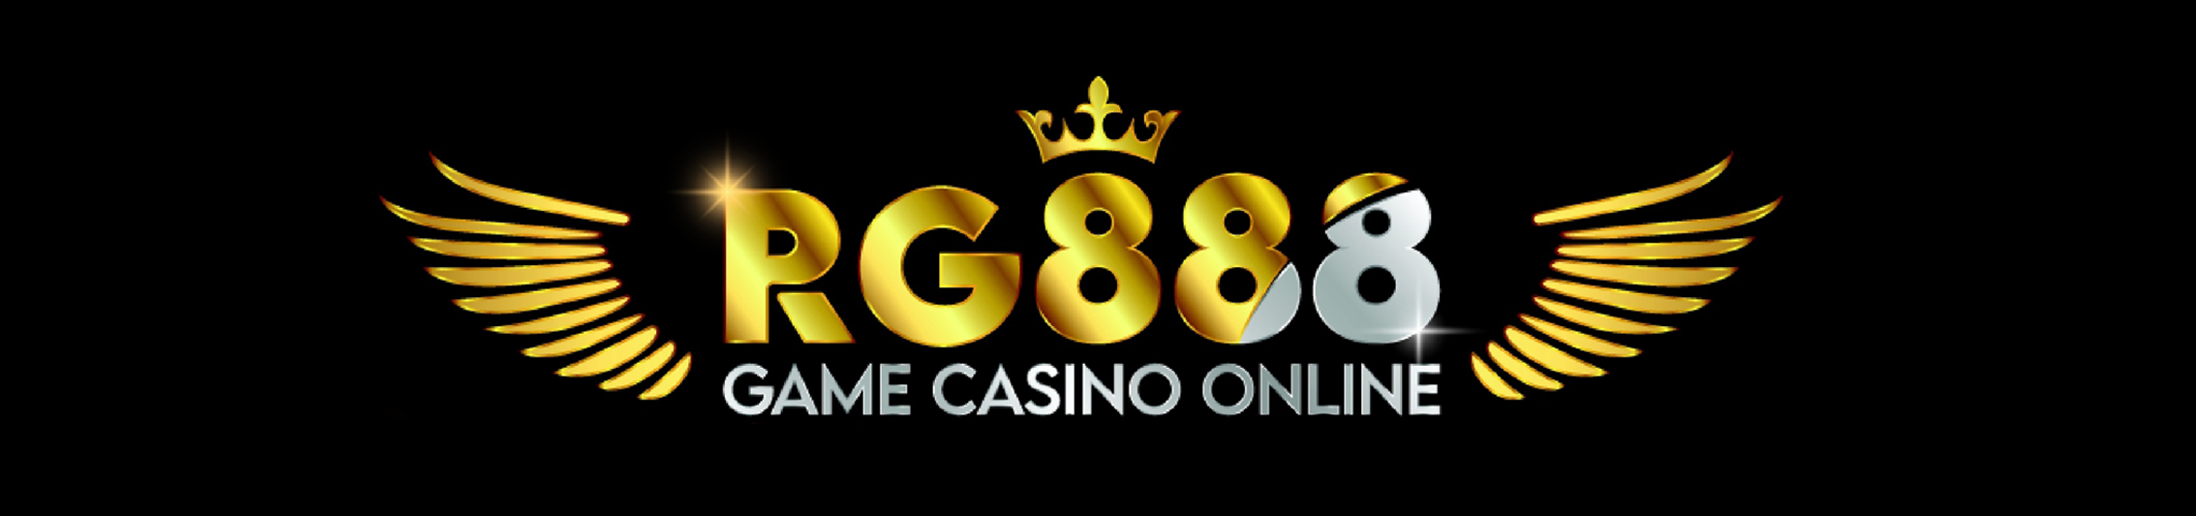 rg888 game casino online